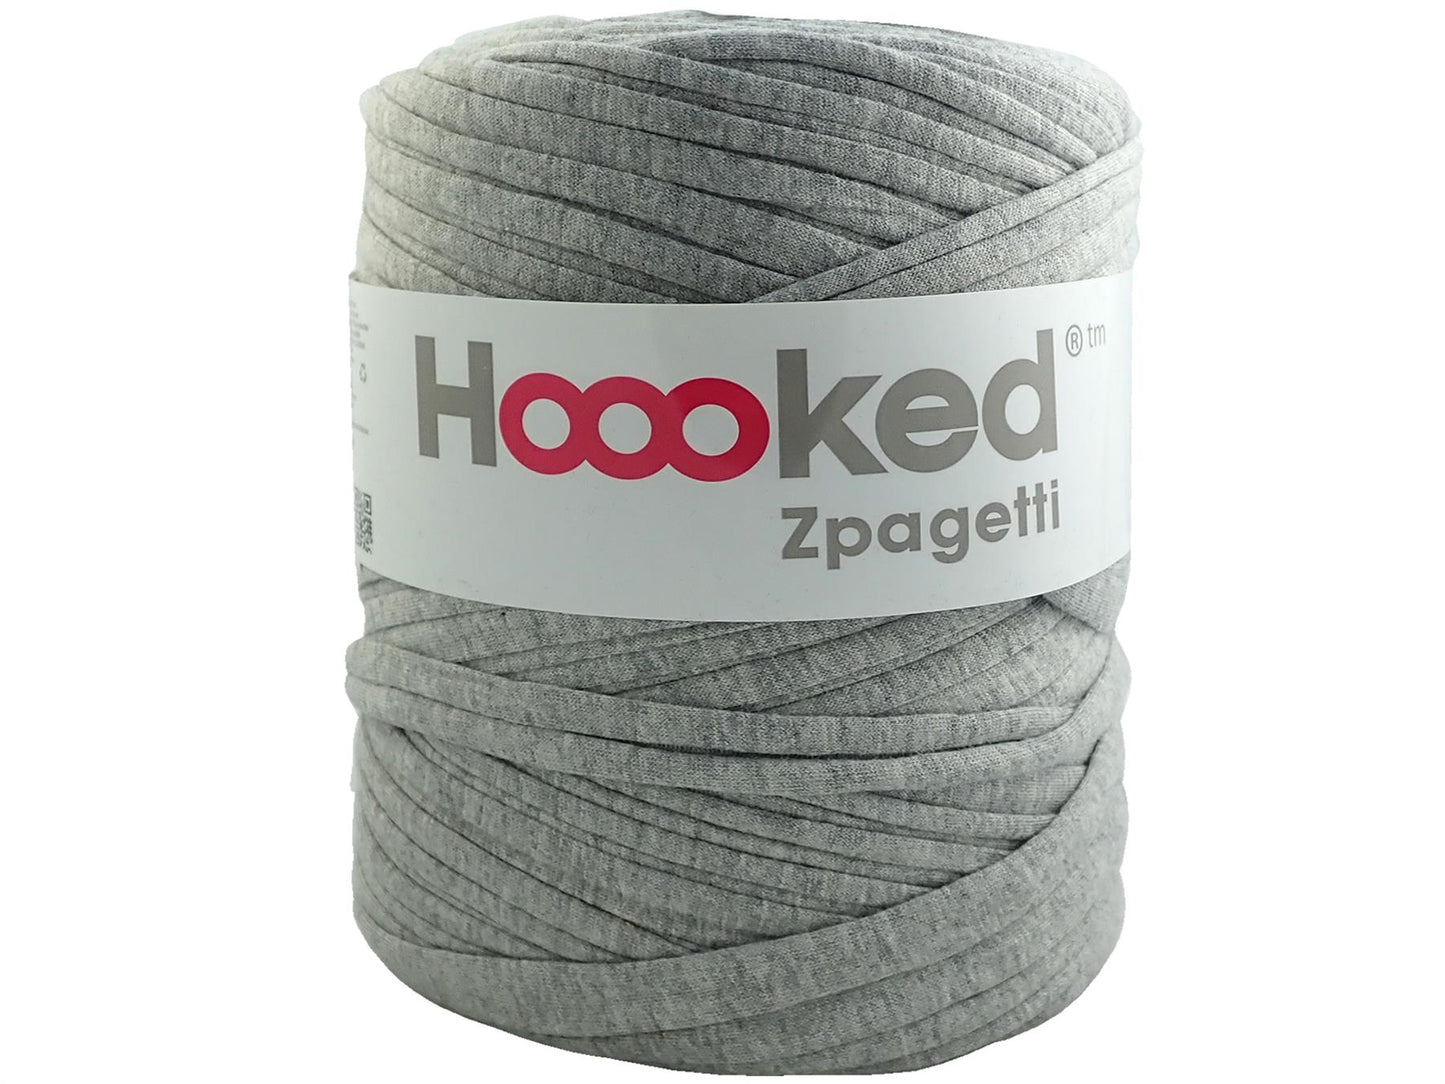 Hoooked Zpagetti Grey Cotton T-Shirt Yarn - 120M 700g